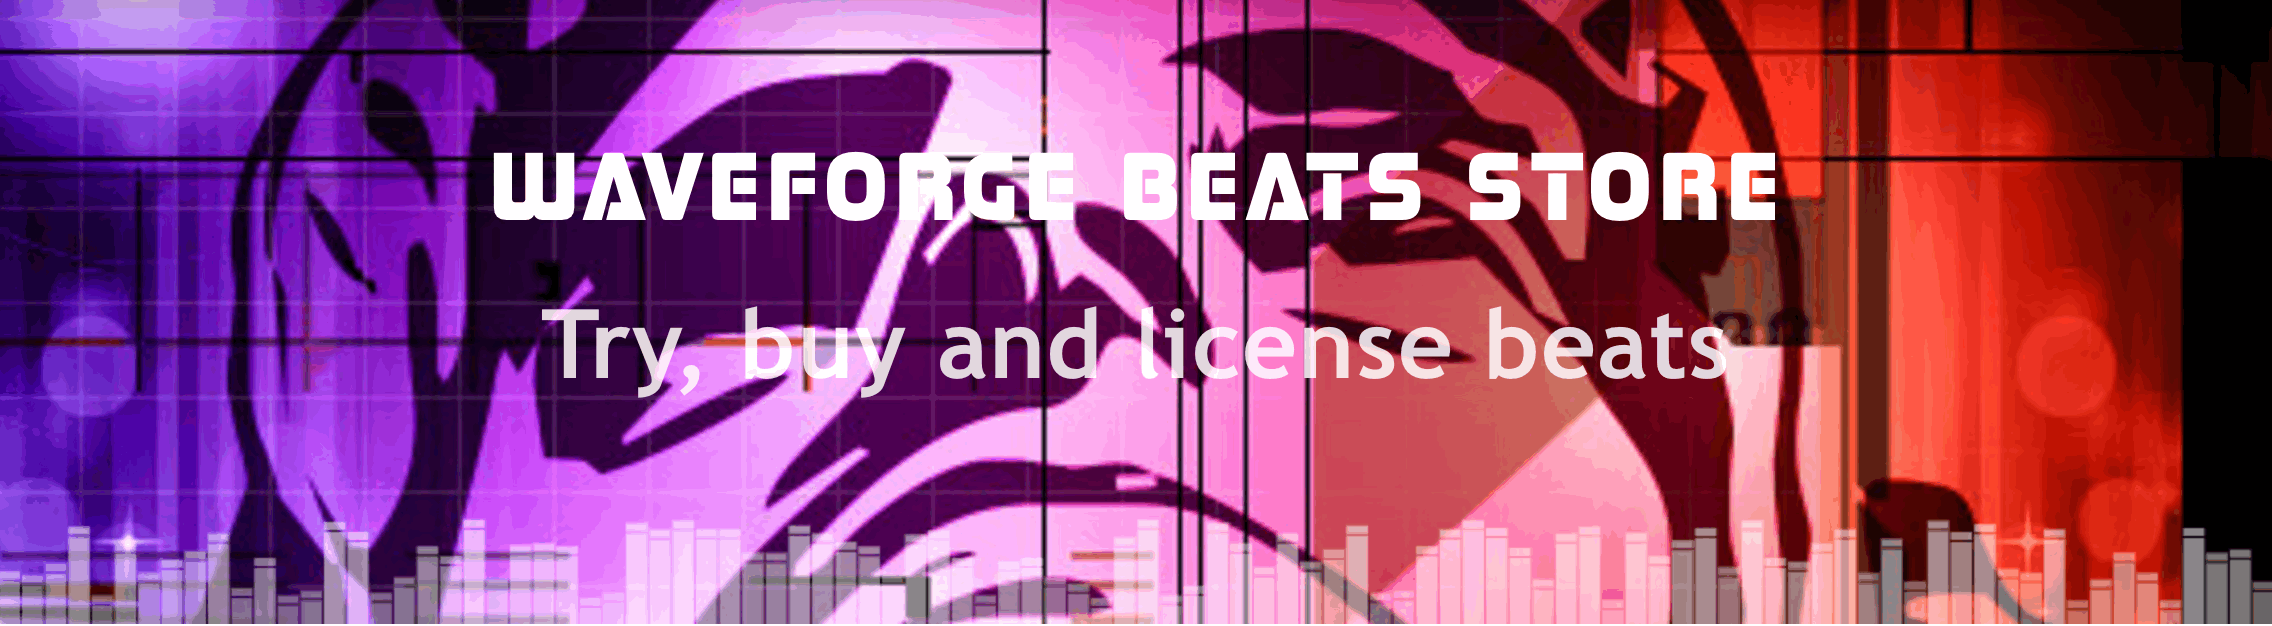 Waveforge Beats Store